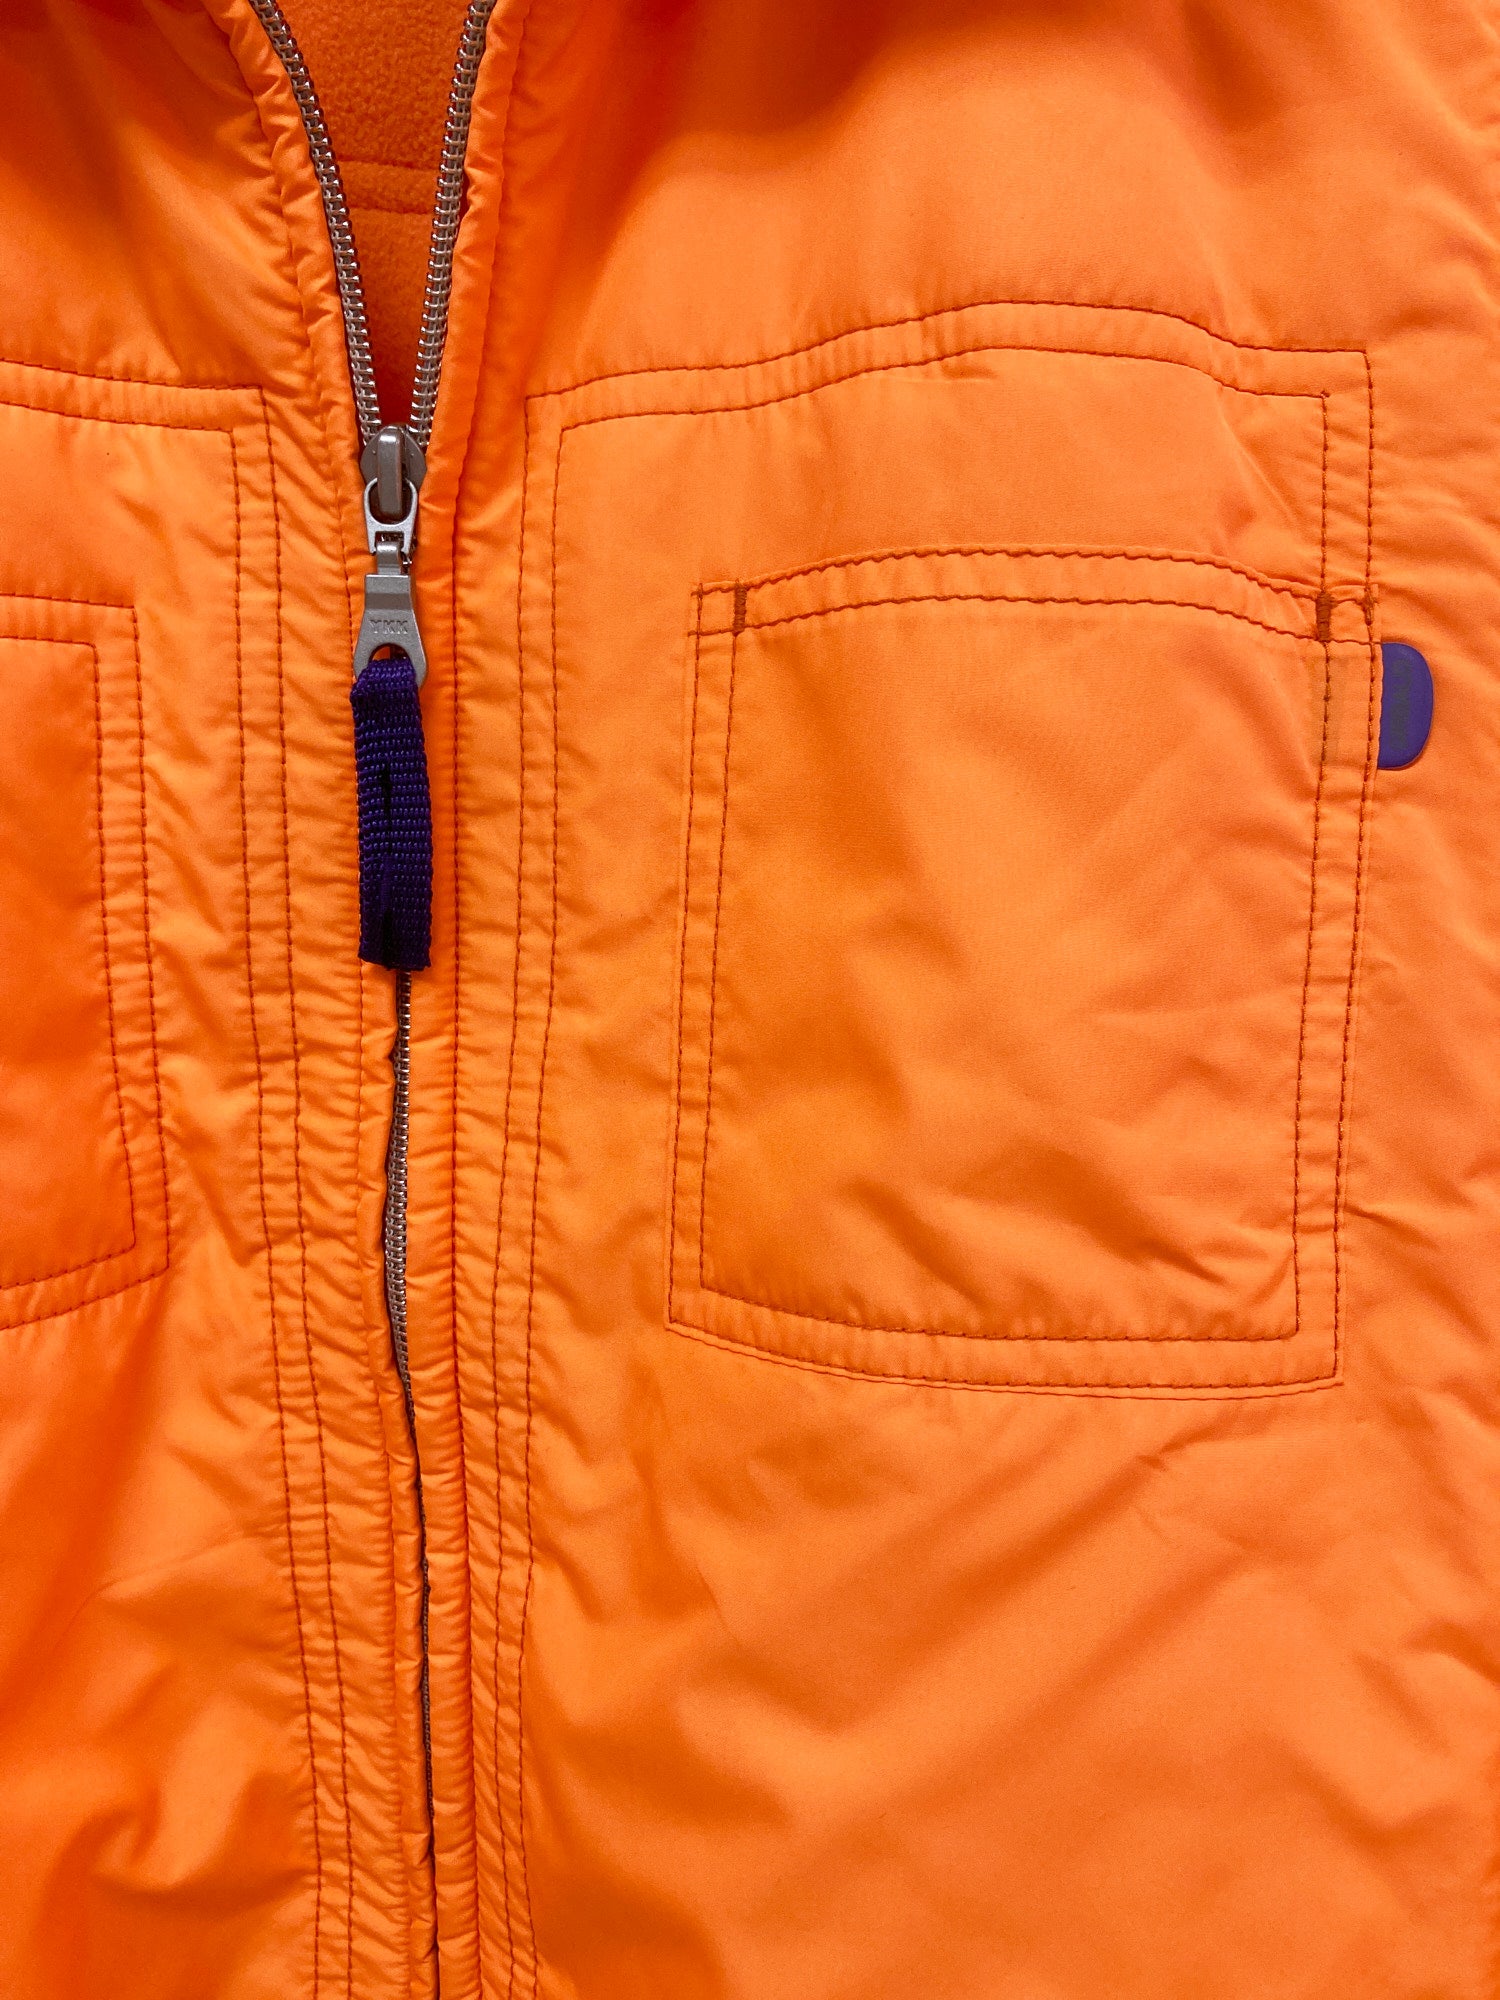 Marithe Francois Girbaud fluorescent orange fleece lined high neck jacket - M S